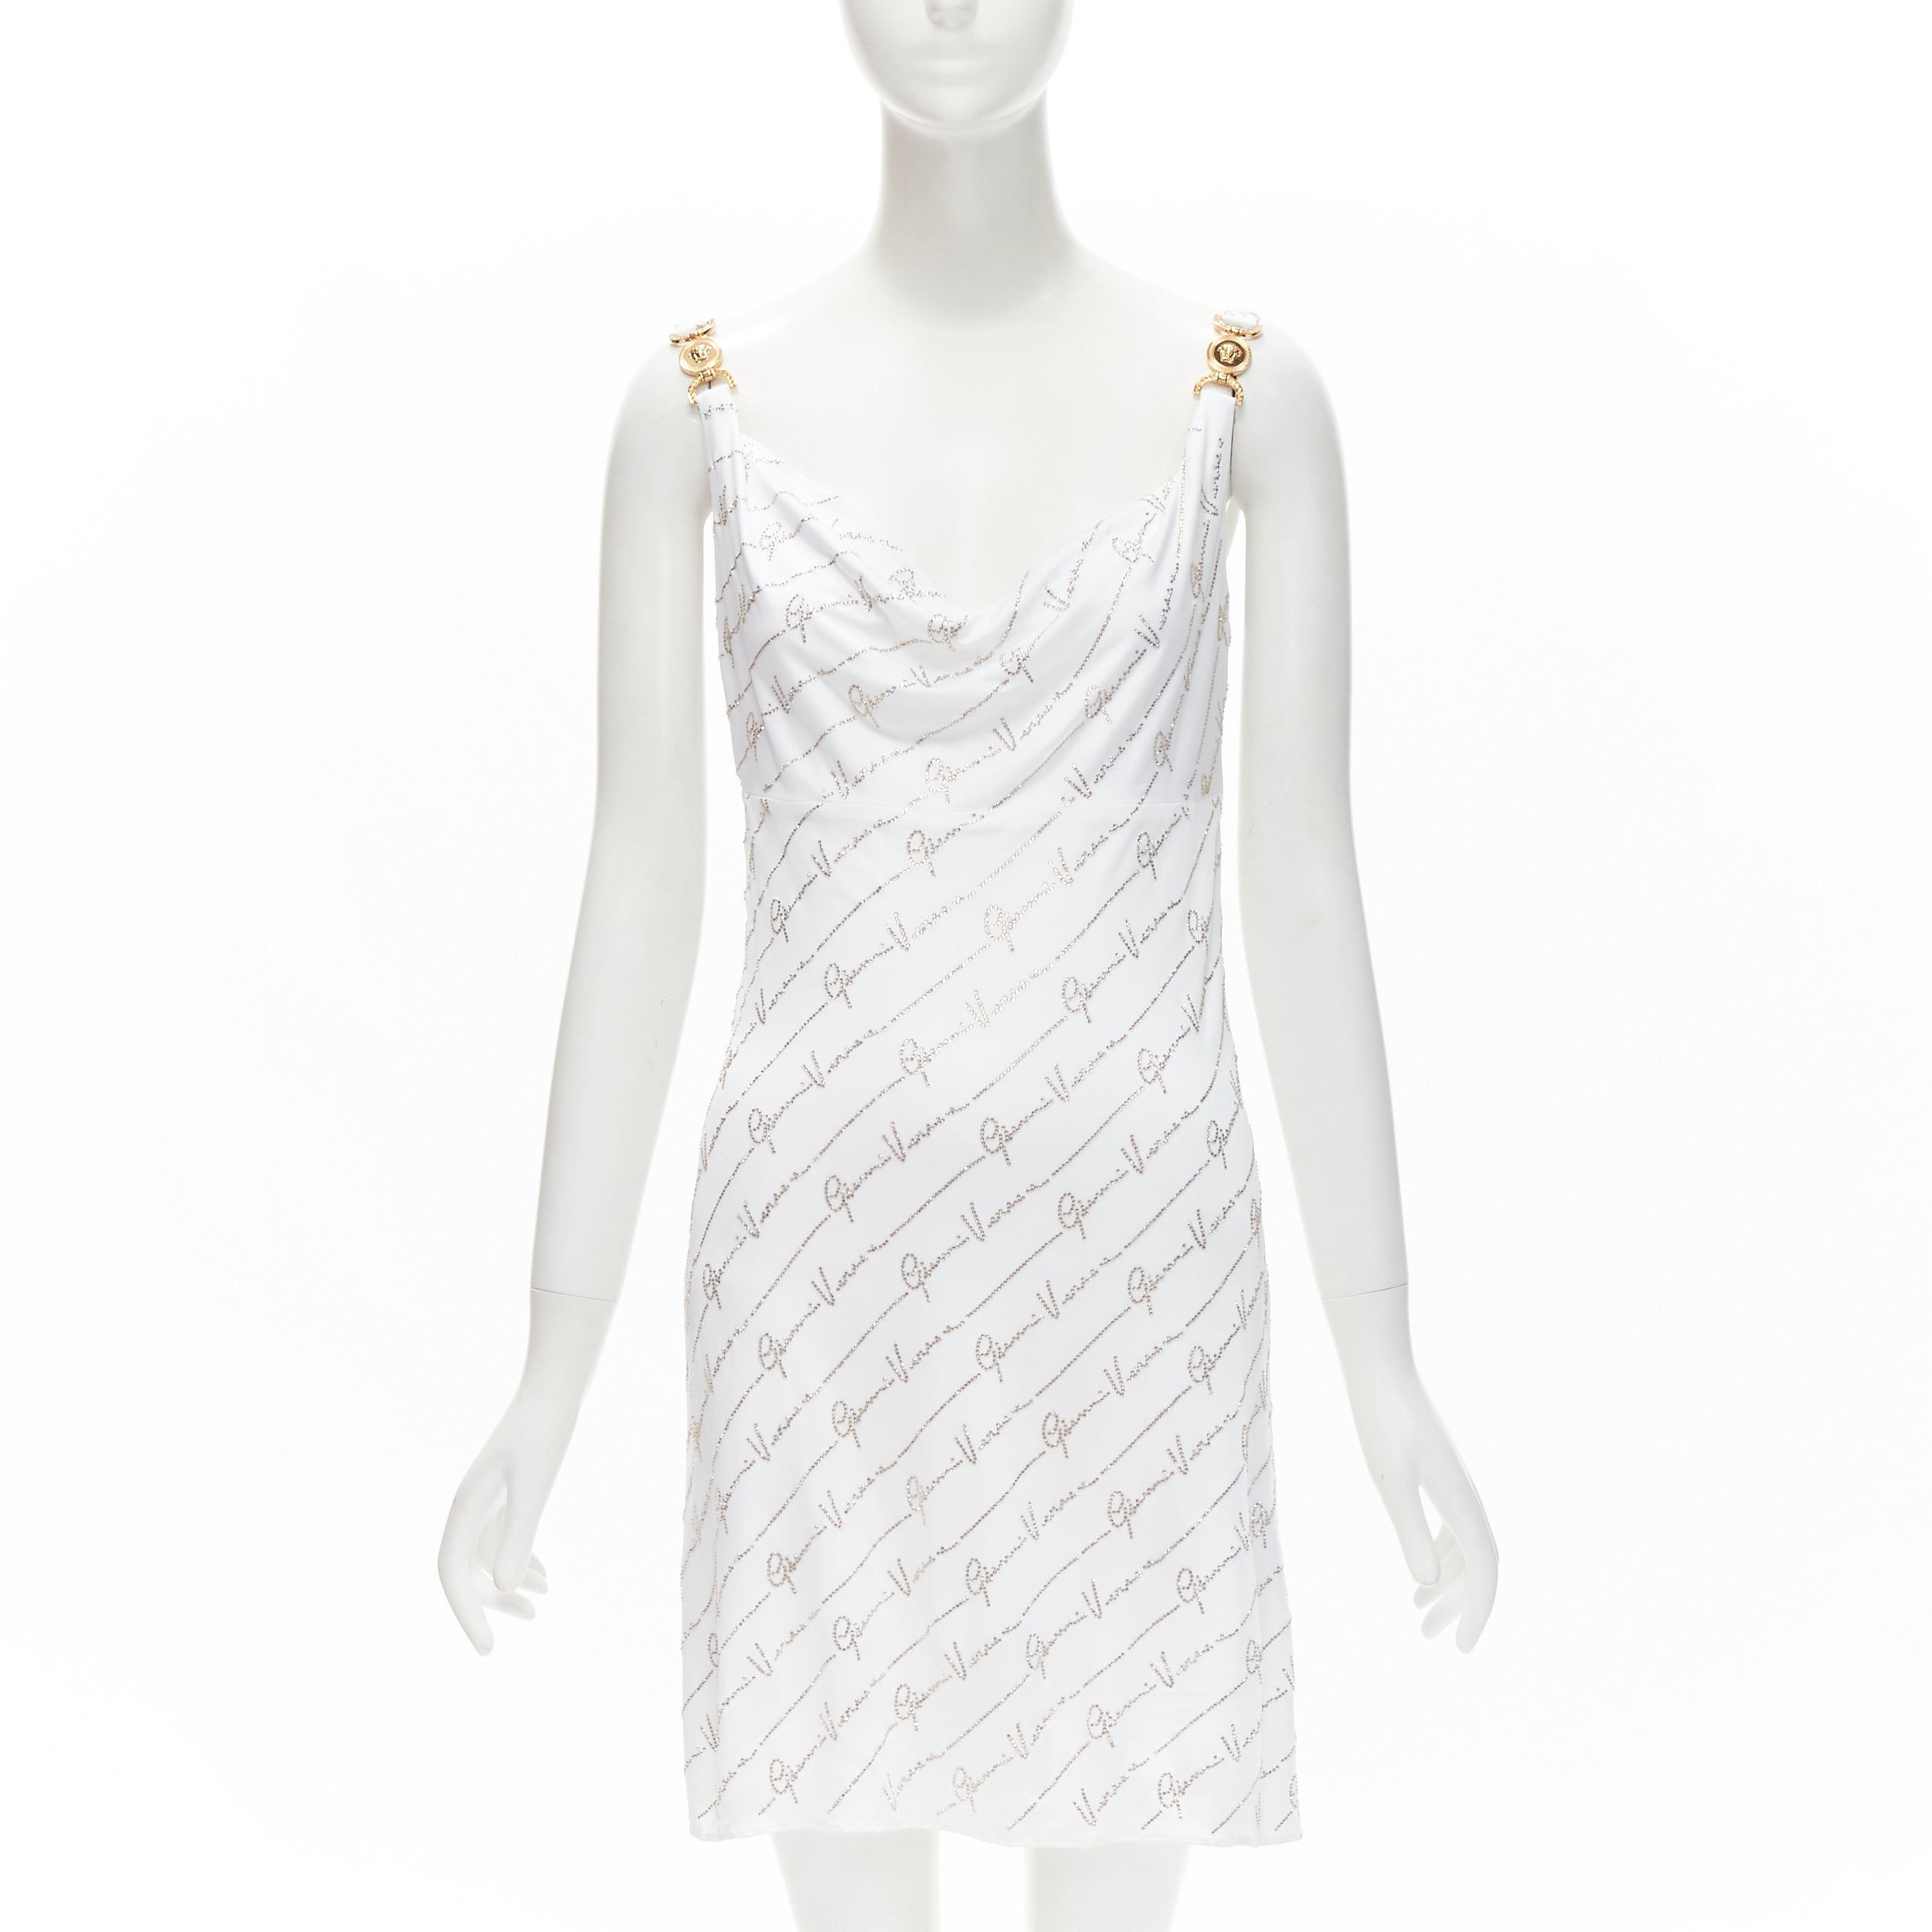 Versace - Robe Medusa incrustée de cristaux blancs incrustés, signature Gianni, taille IT 44 L, état neuf en vente